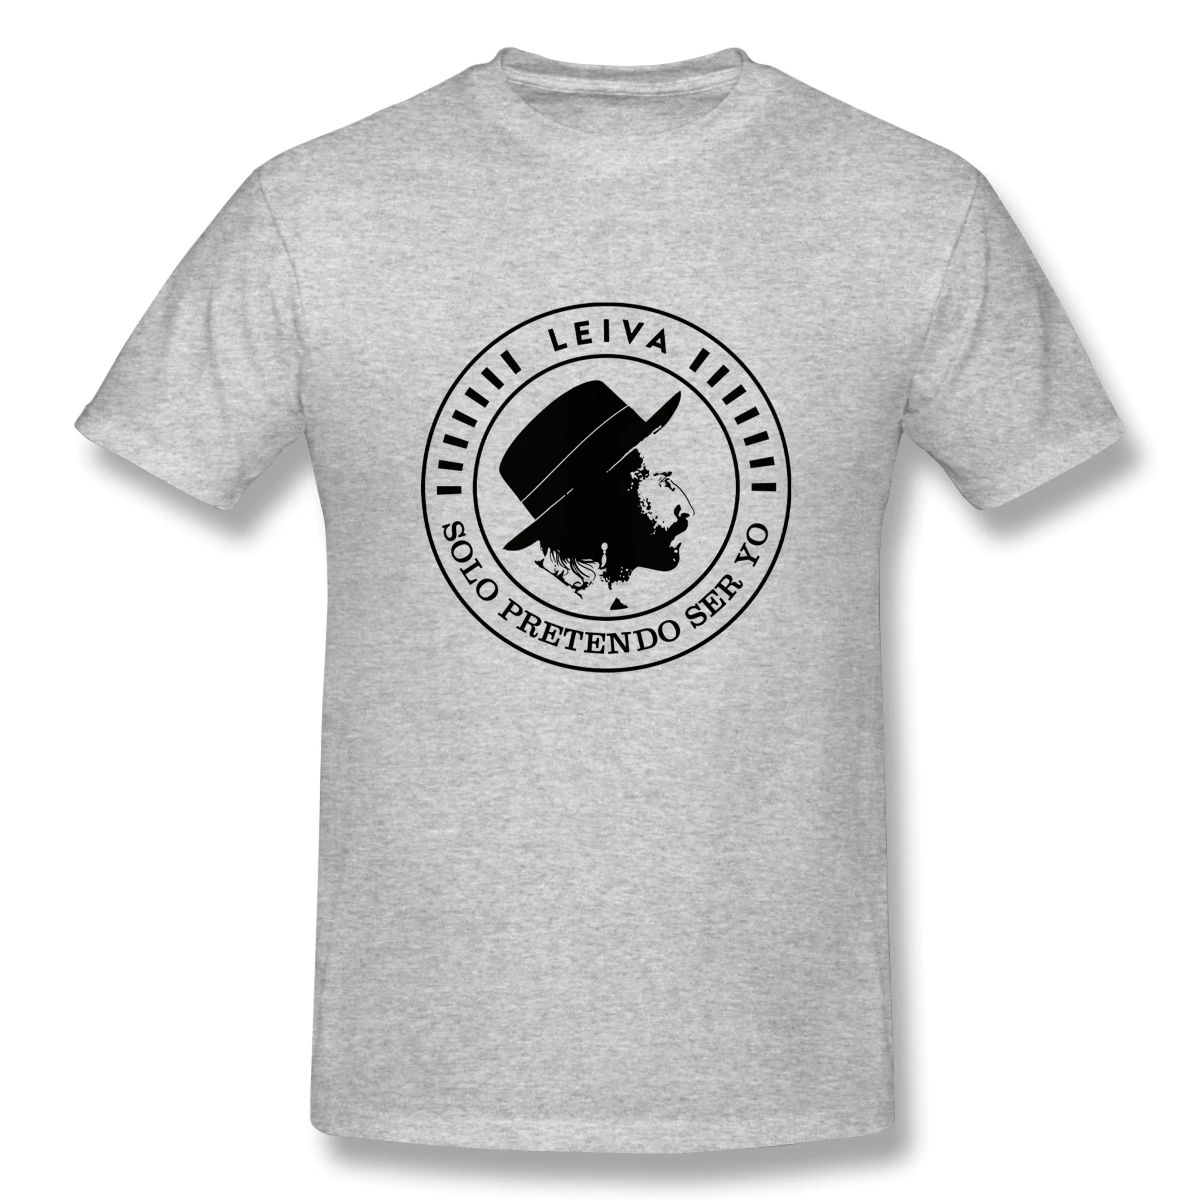 

Camiseta Ser Yo De Leivas De Leiva Men's Basic Short Sleeve T-Shirt Funny Graphic R326 Tees USA Size